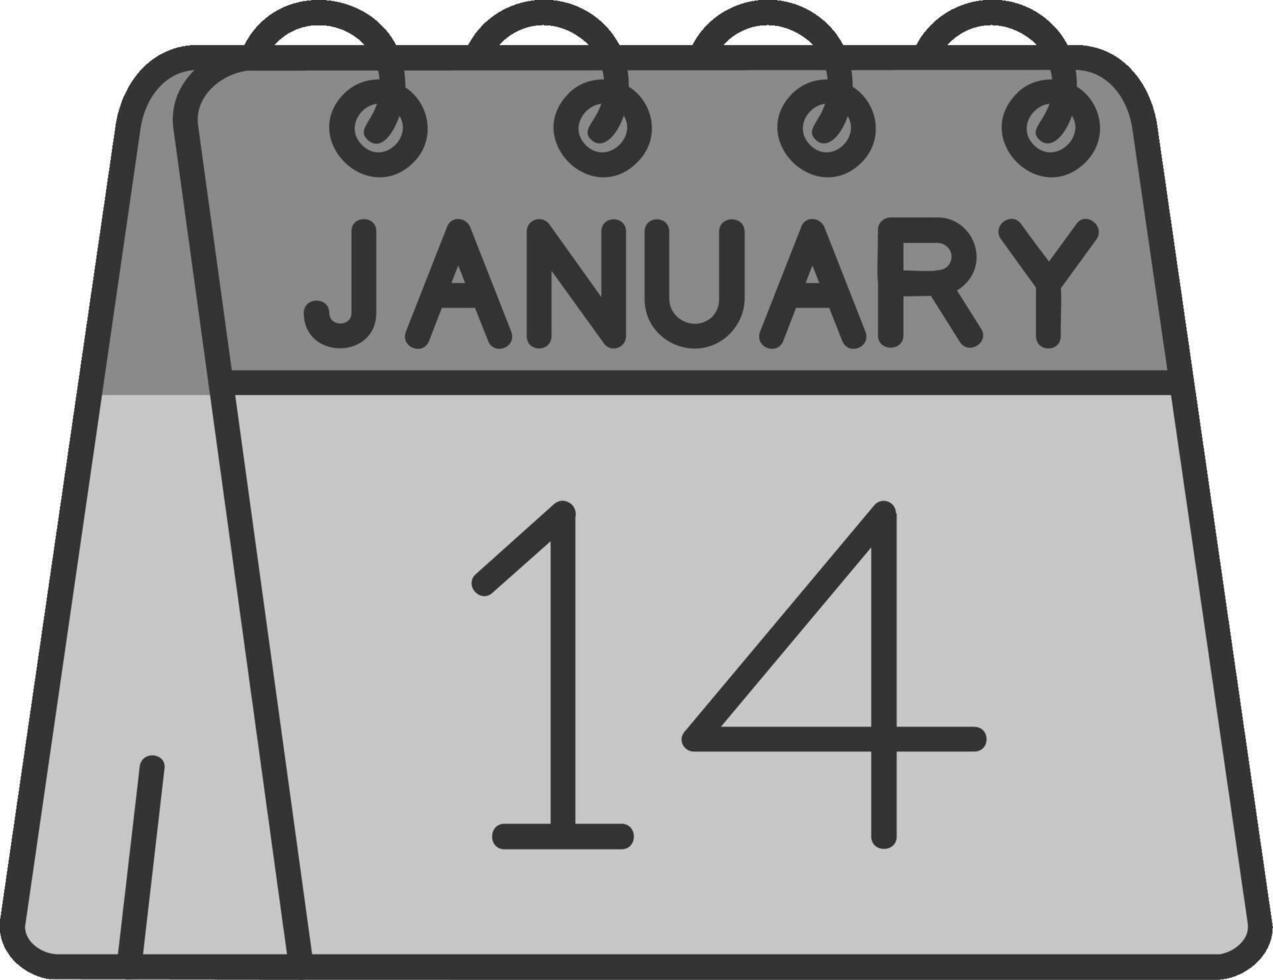 14:e av januari linje fylld gråskale ikon vektor